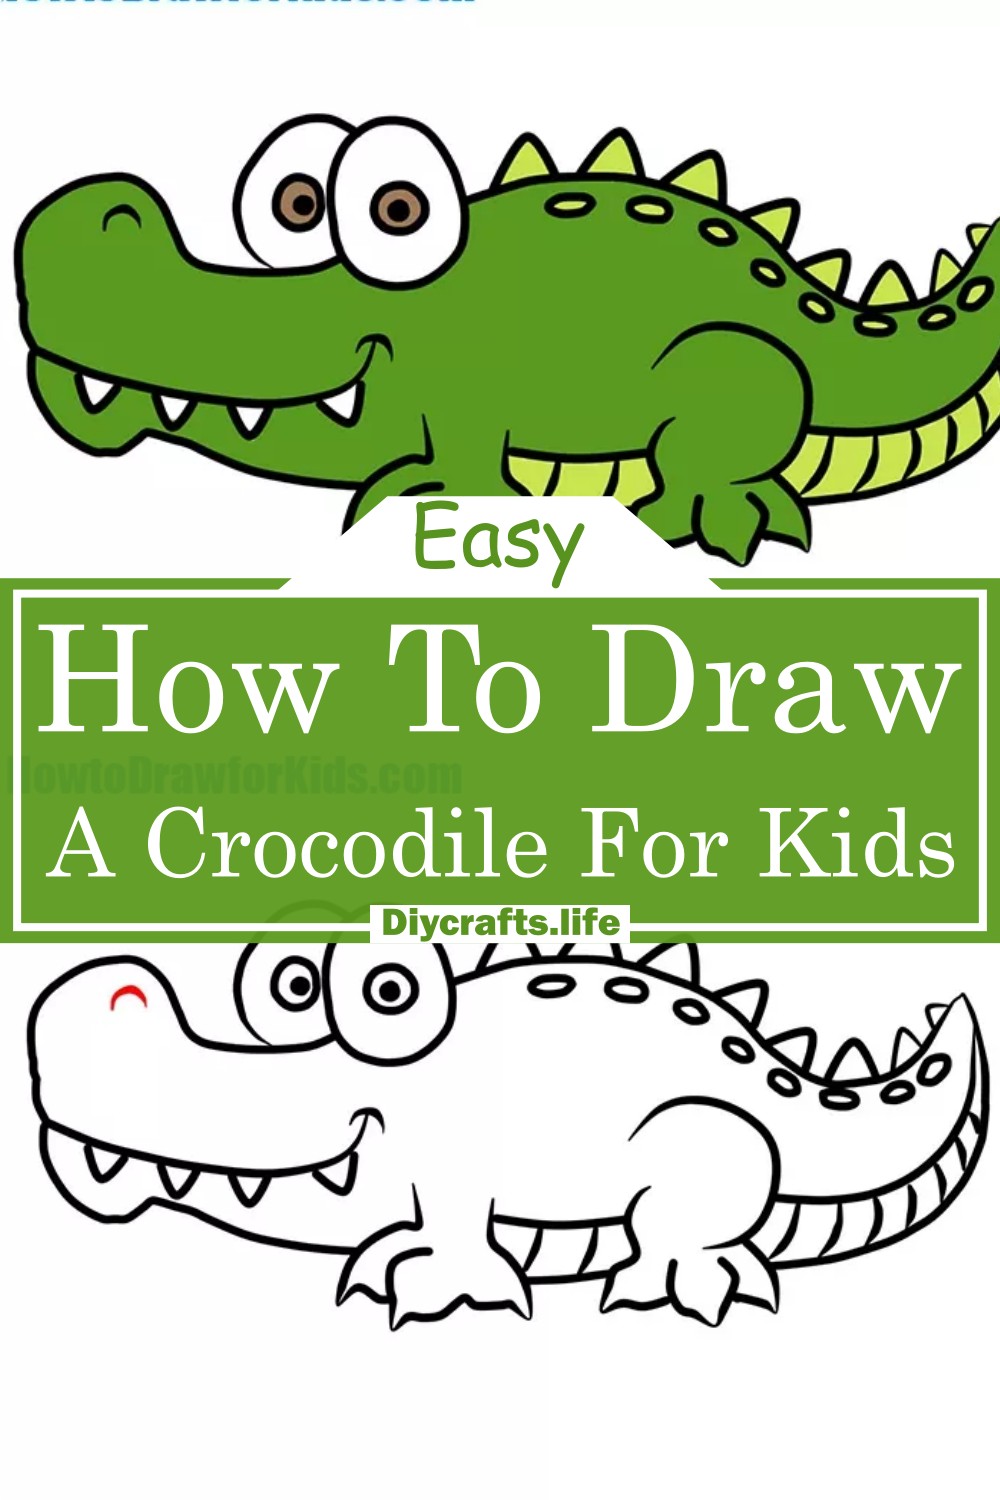 How to Draw a Crocodile - A Fun and Easy Crocodile Drawing Tutorial